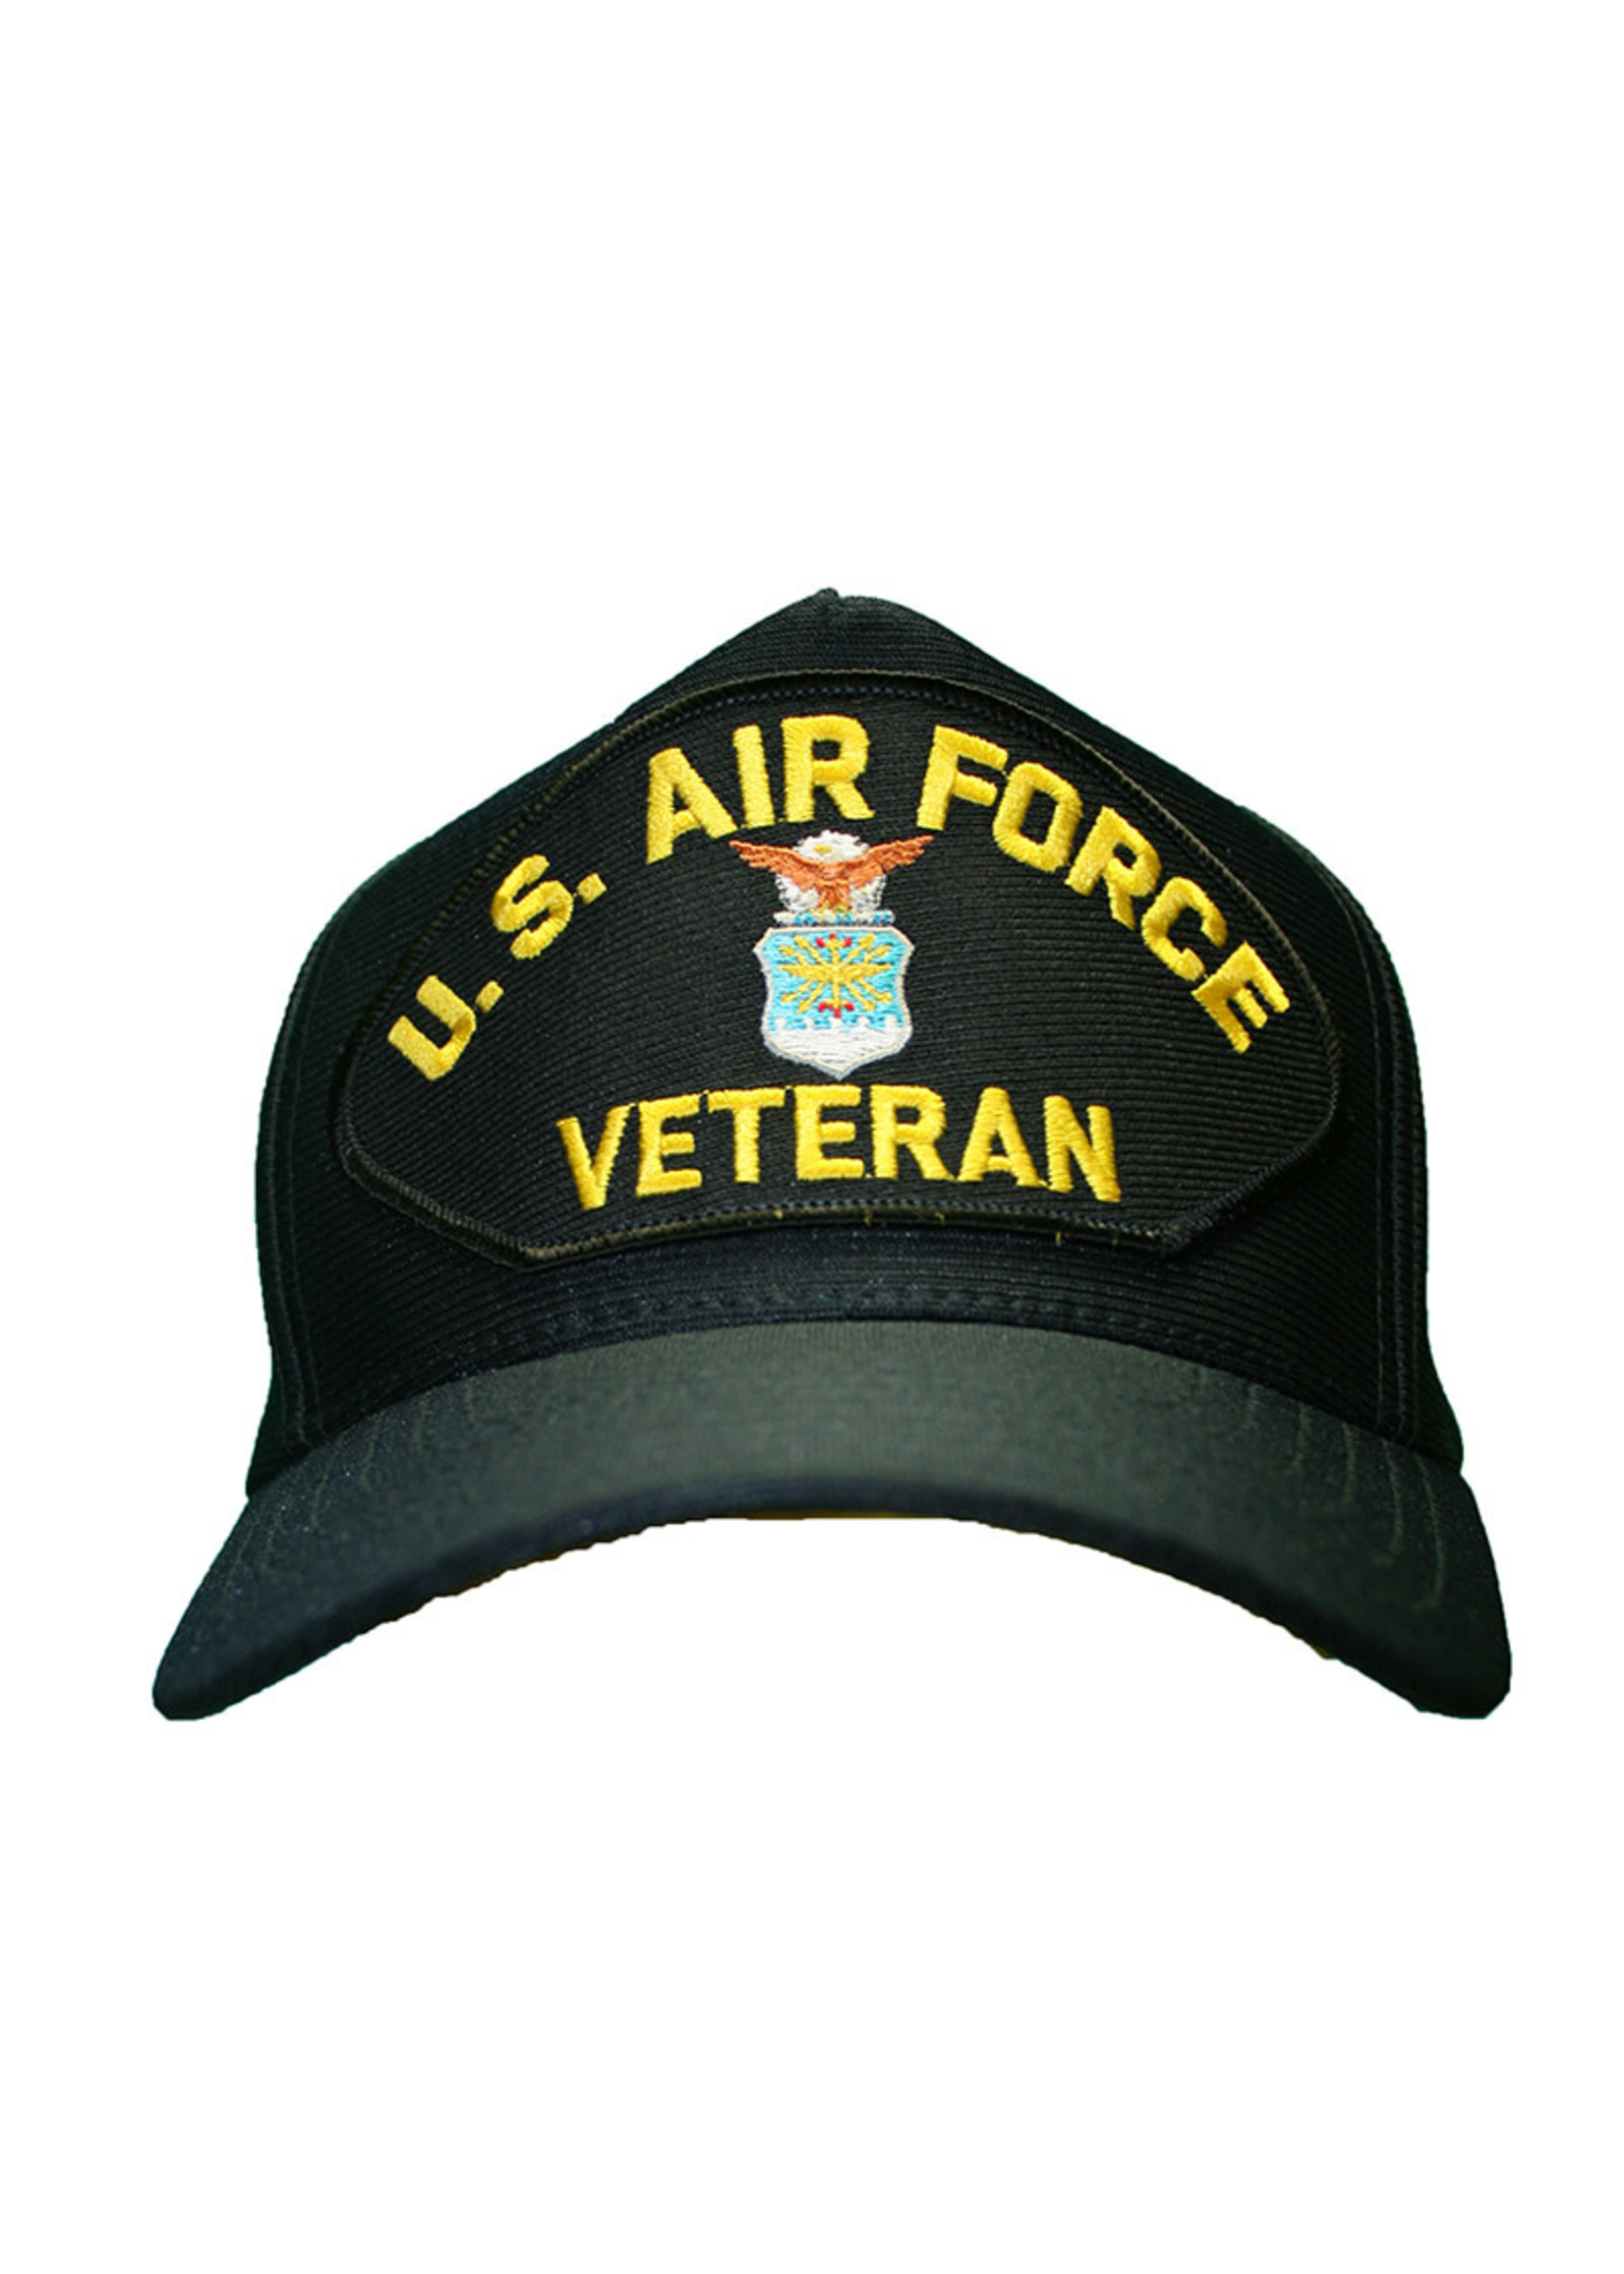 Eagle Crest Cap Air Force Veteran Black with Emblem